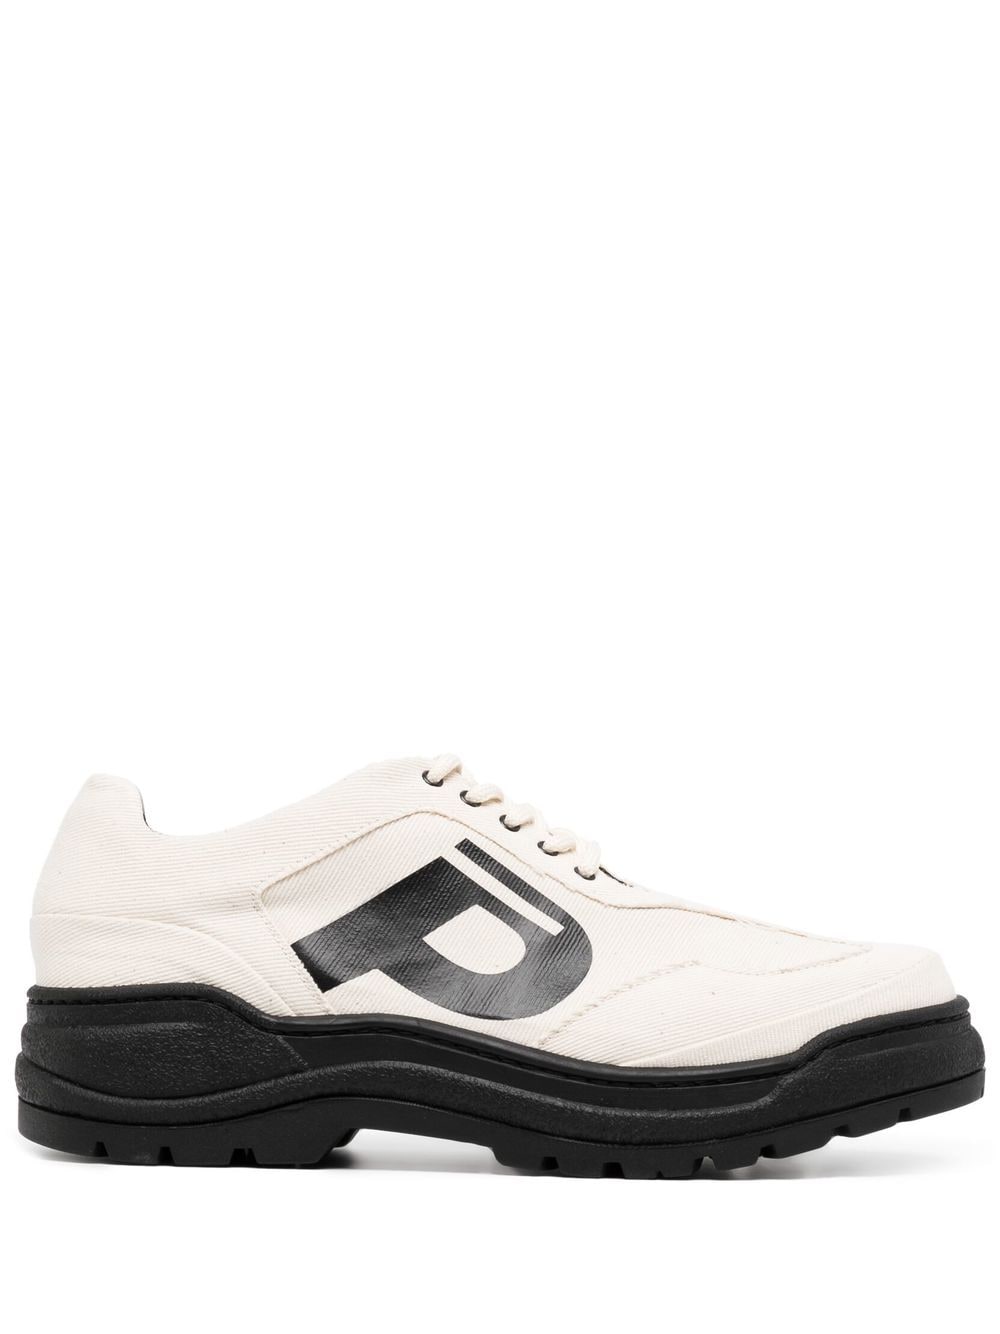 PHILEO 020 BASALT low-top sneakers - White von PHILEO